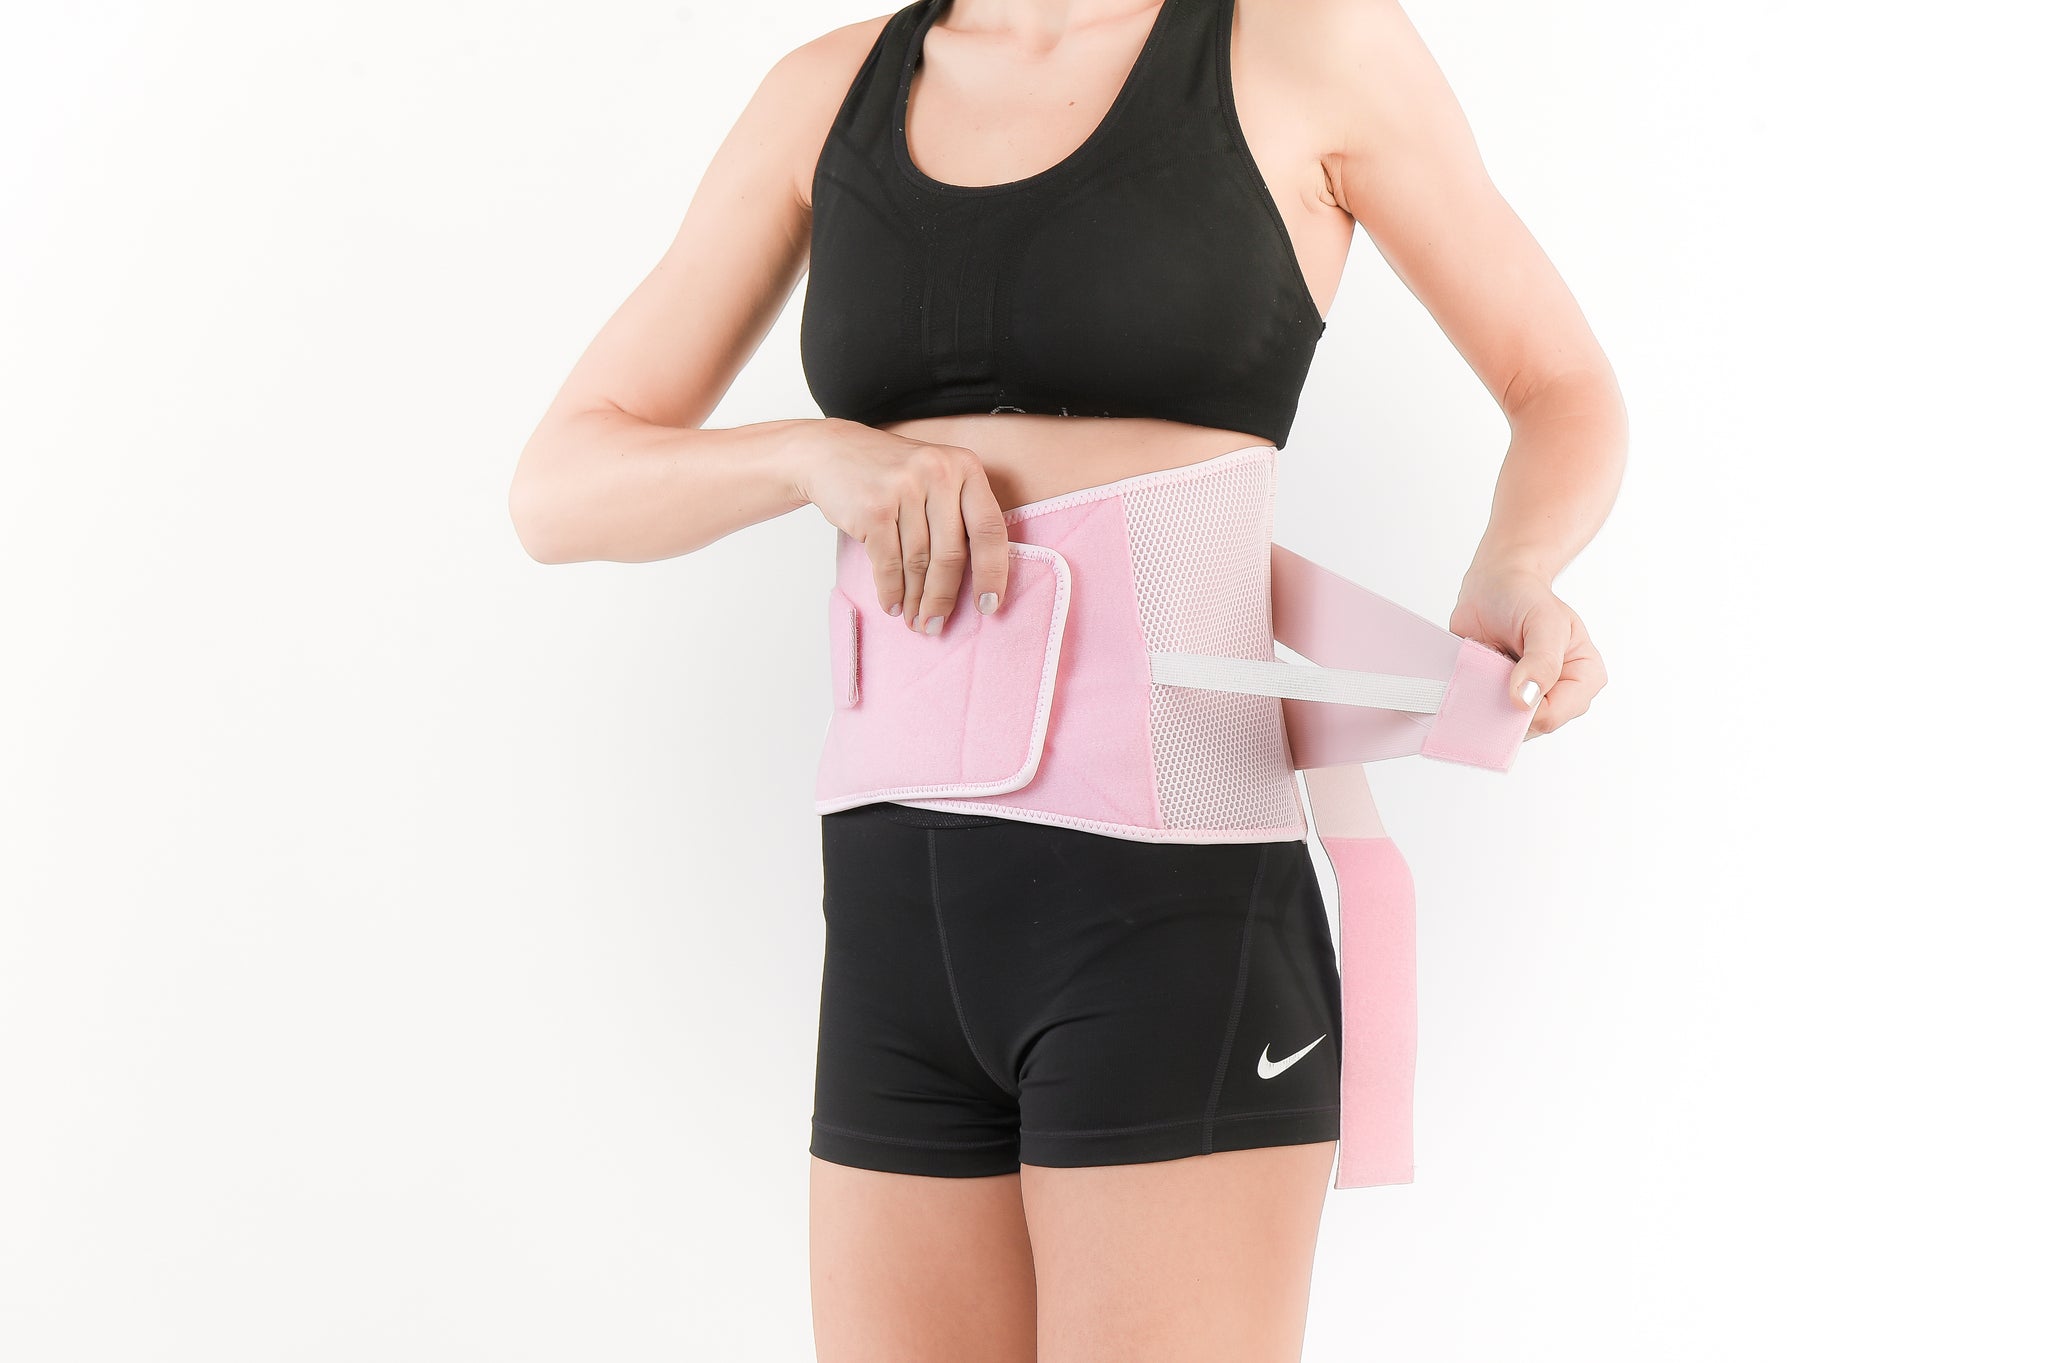 SENTEQ Women Pink Lumbar Support Belt Lumbosacral Back Brace (SQ3-O009)